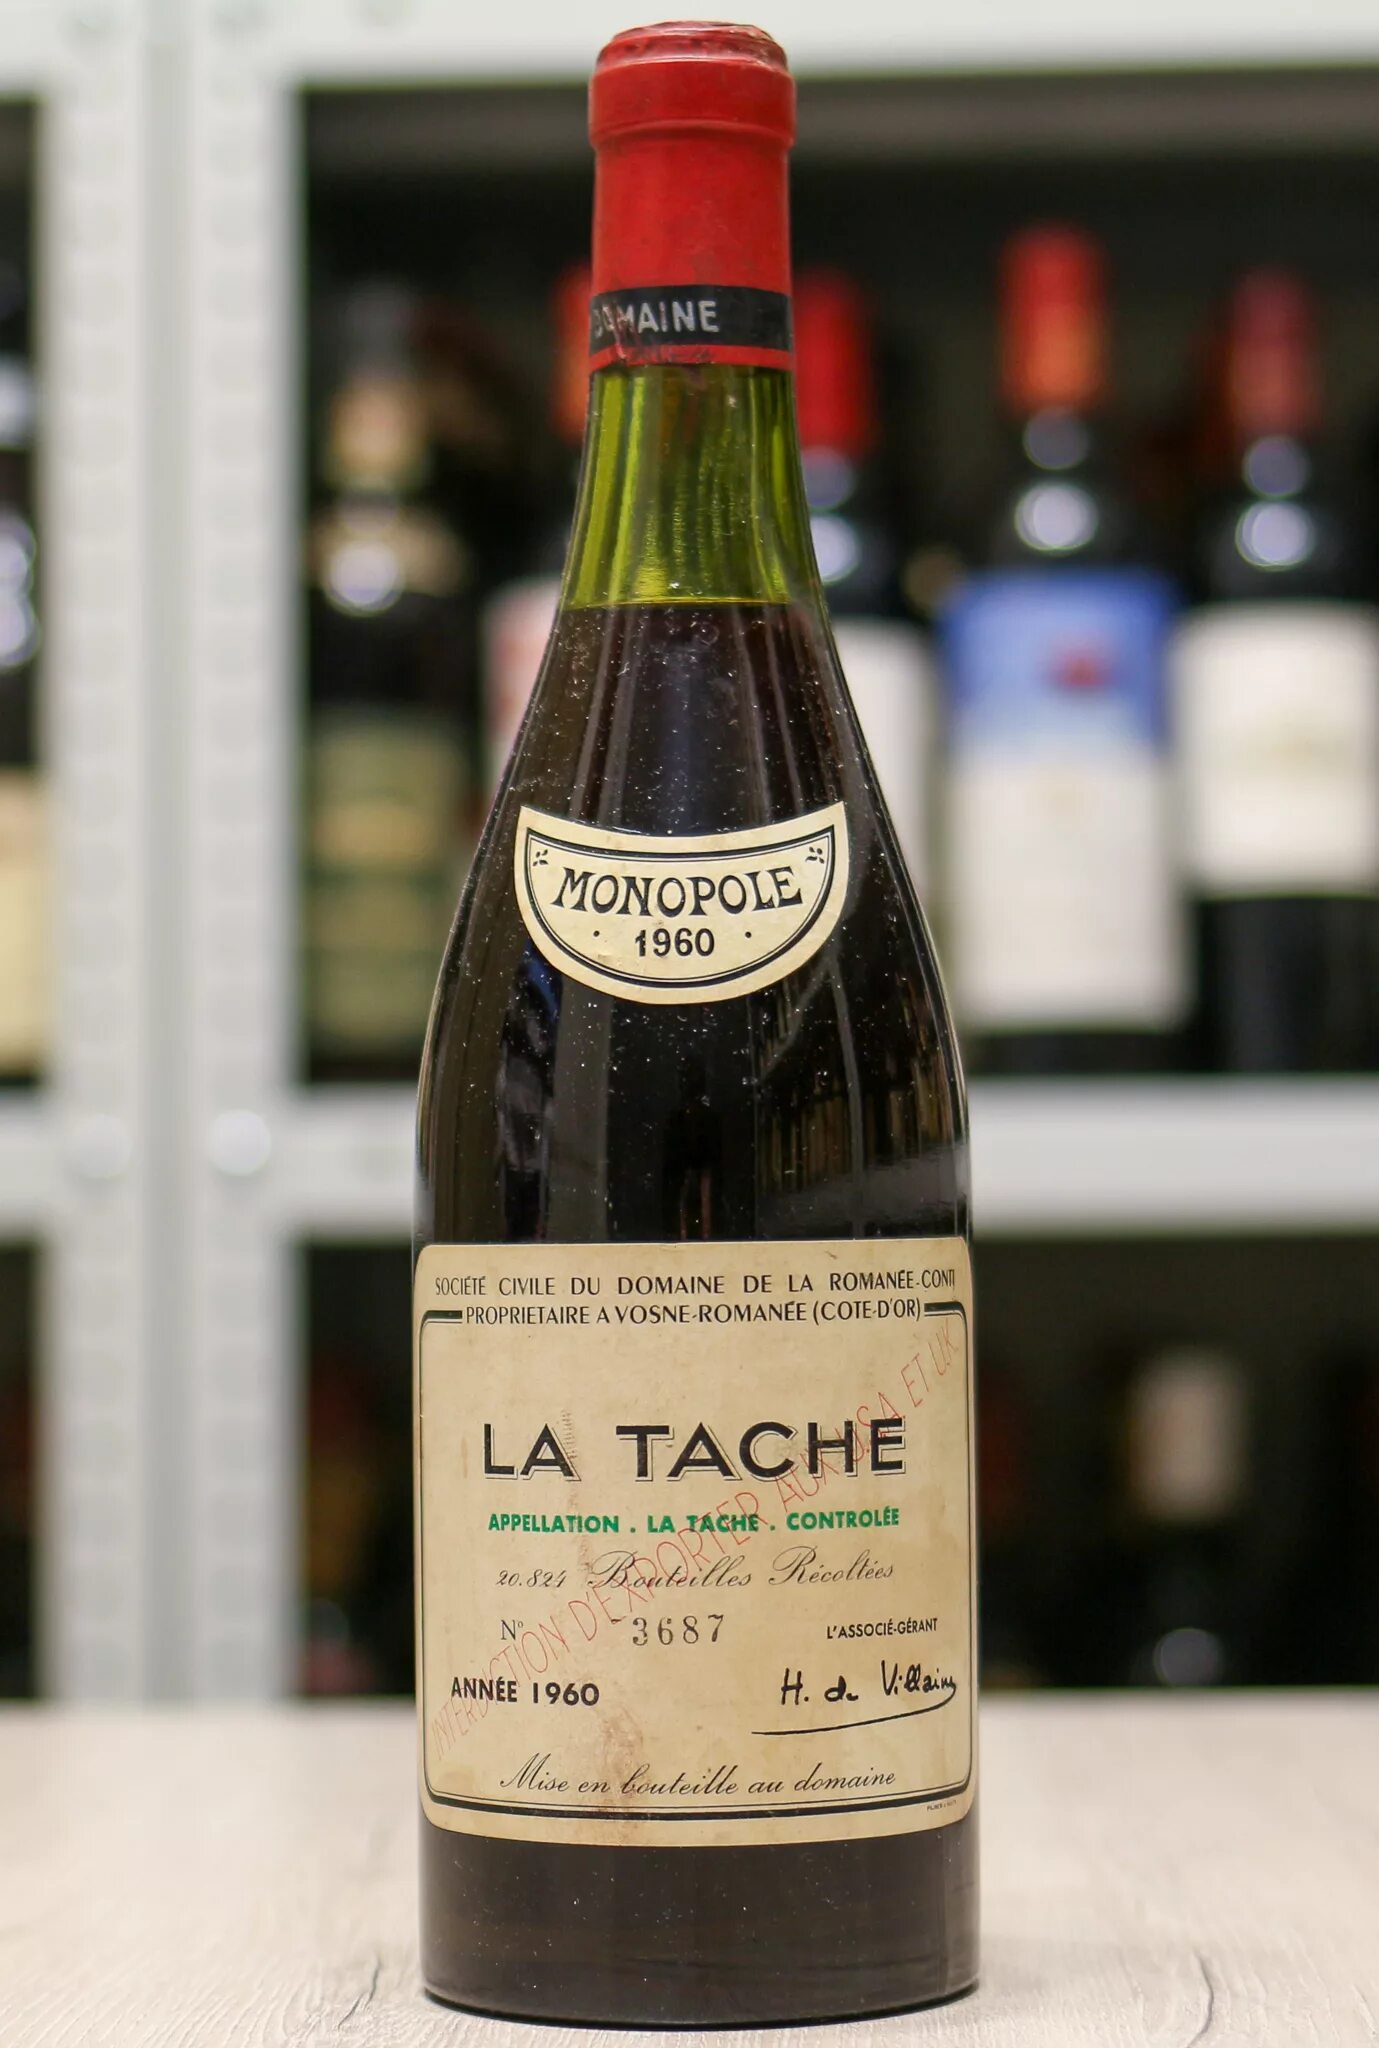 Вино Domaine de la Romanee-Conti. Romanee Conti вино. La tache вино. La tache вино 2016. Купить вино ла